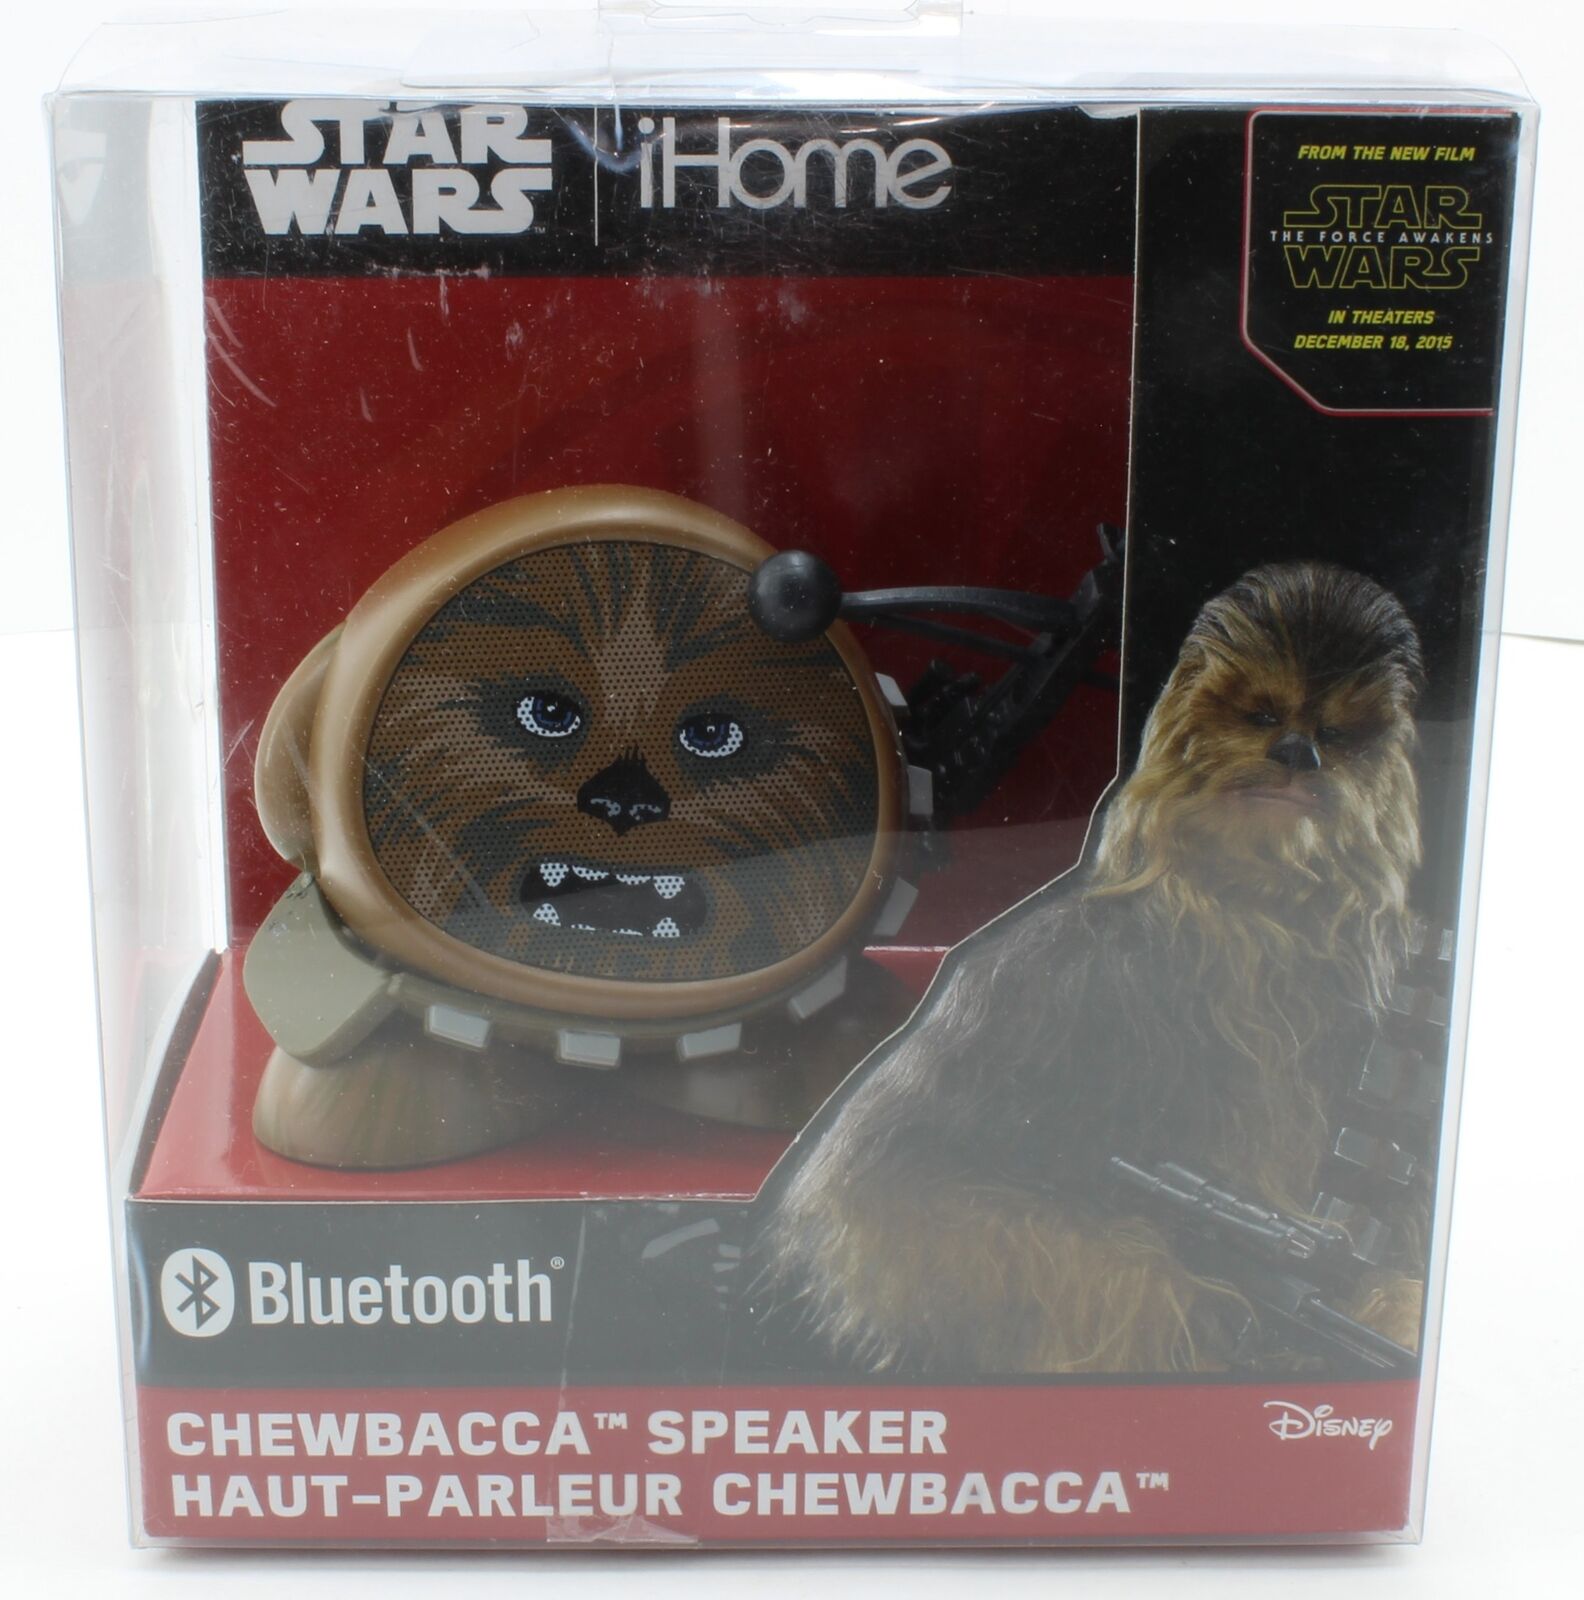 iHome -Disney Star Wars Bluetooth Speaker Chewbacca